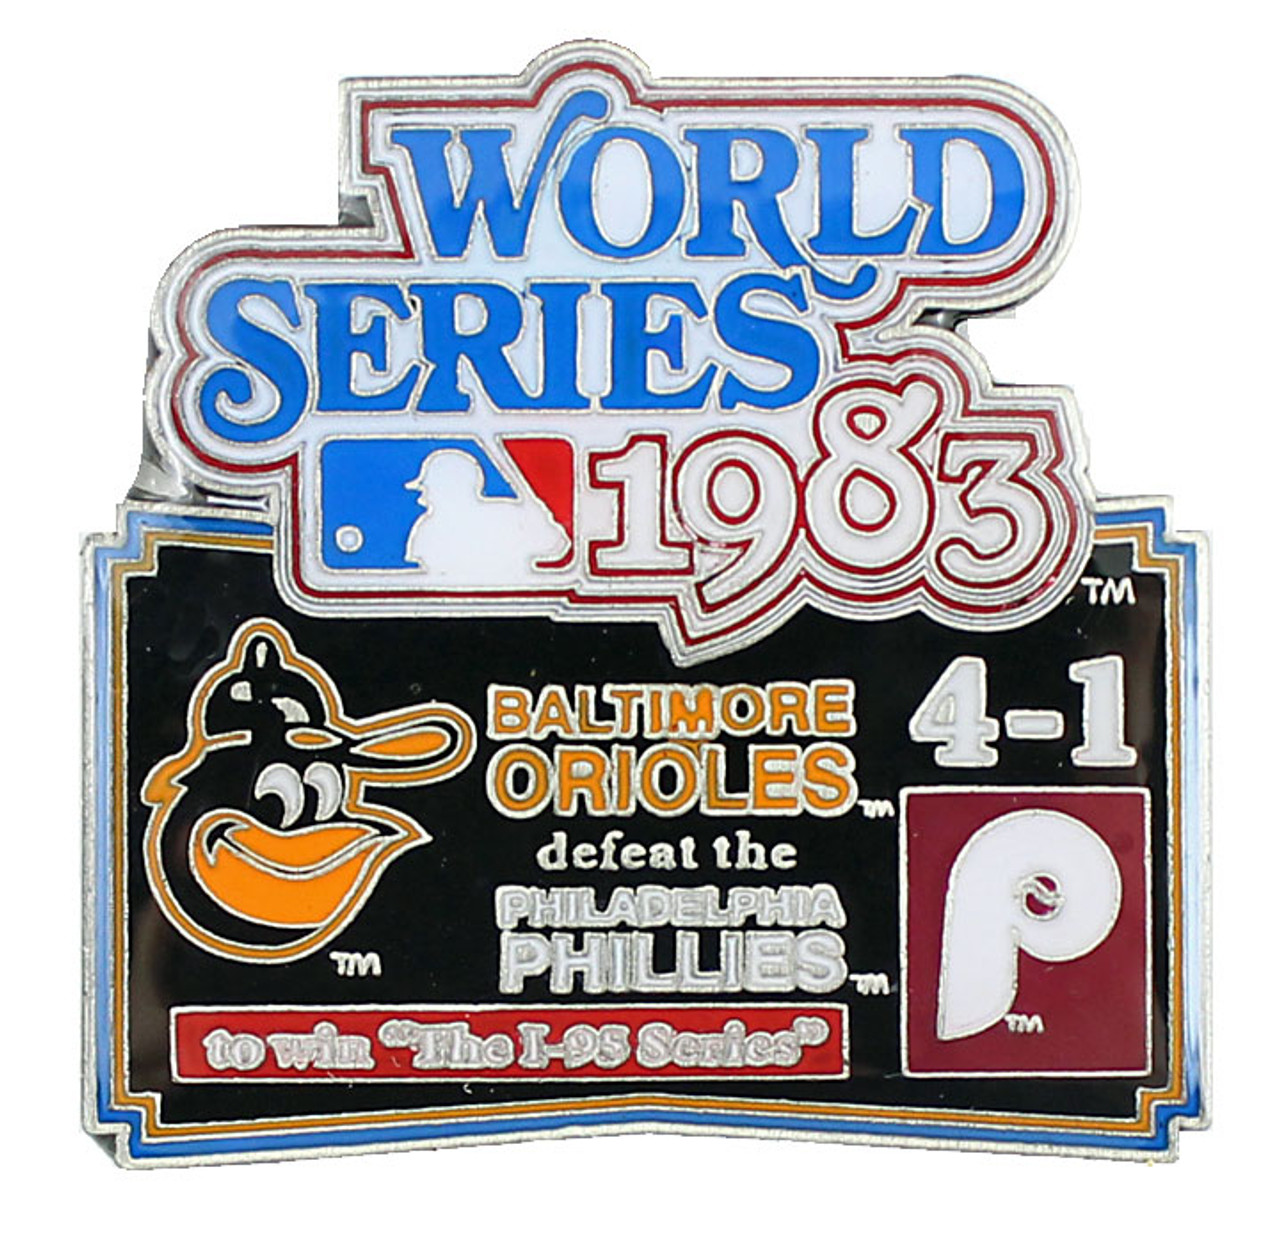 1983 World Series Commemorative Pin - Orioles vs. Phillies